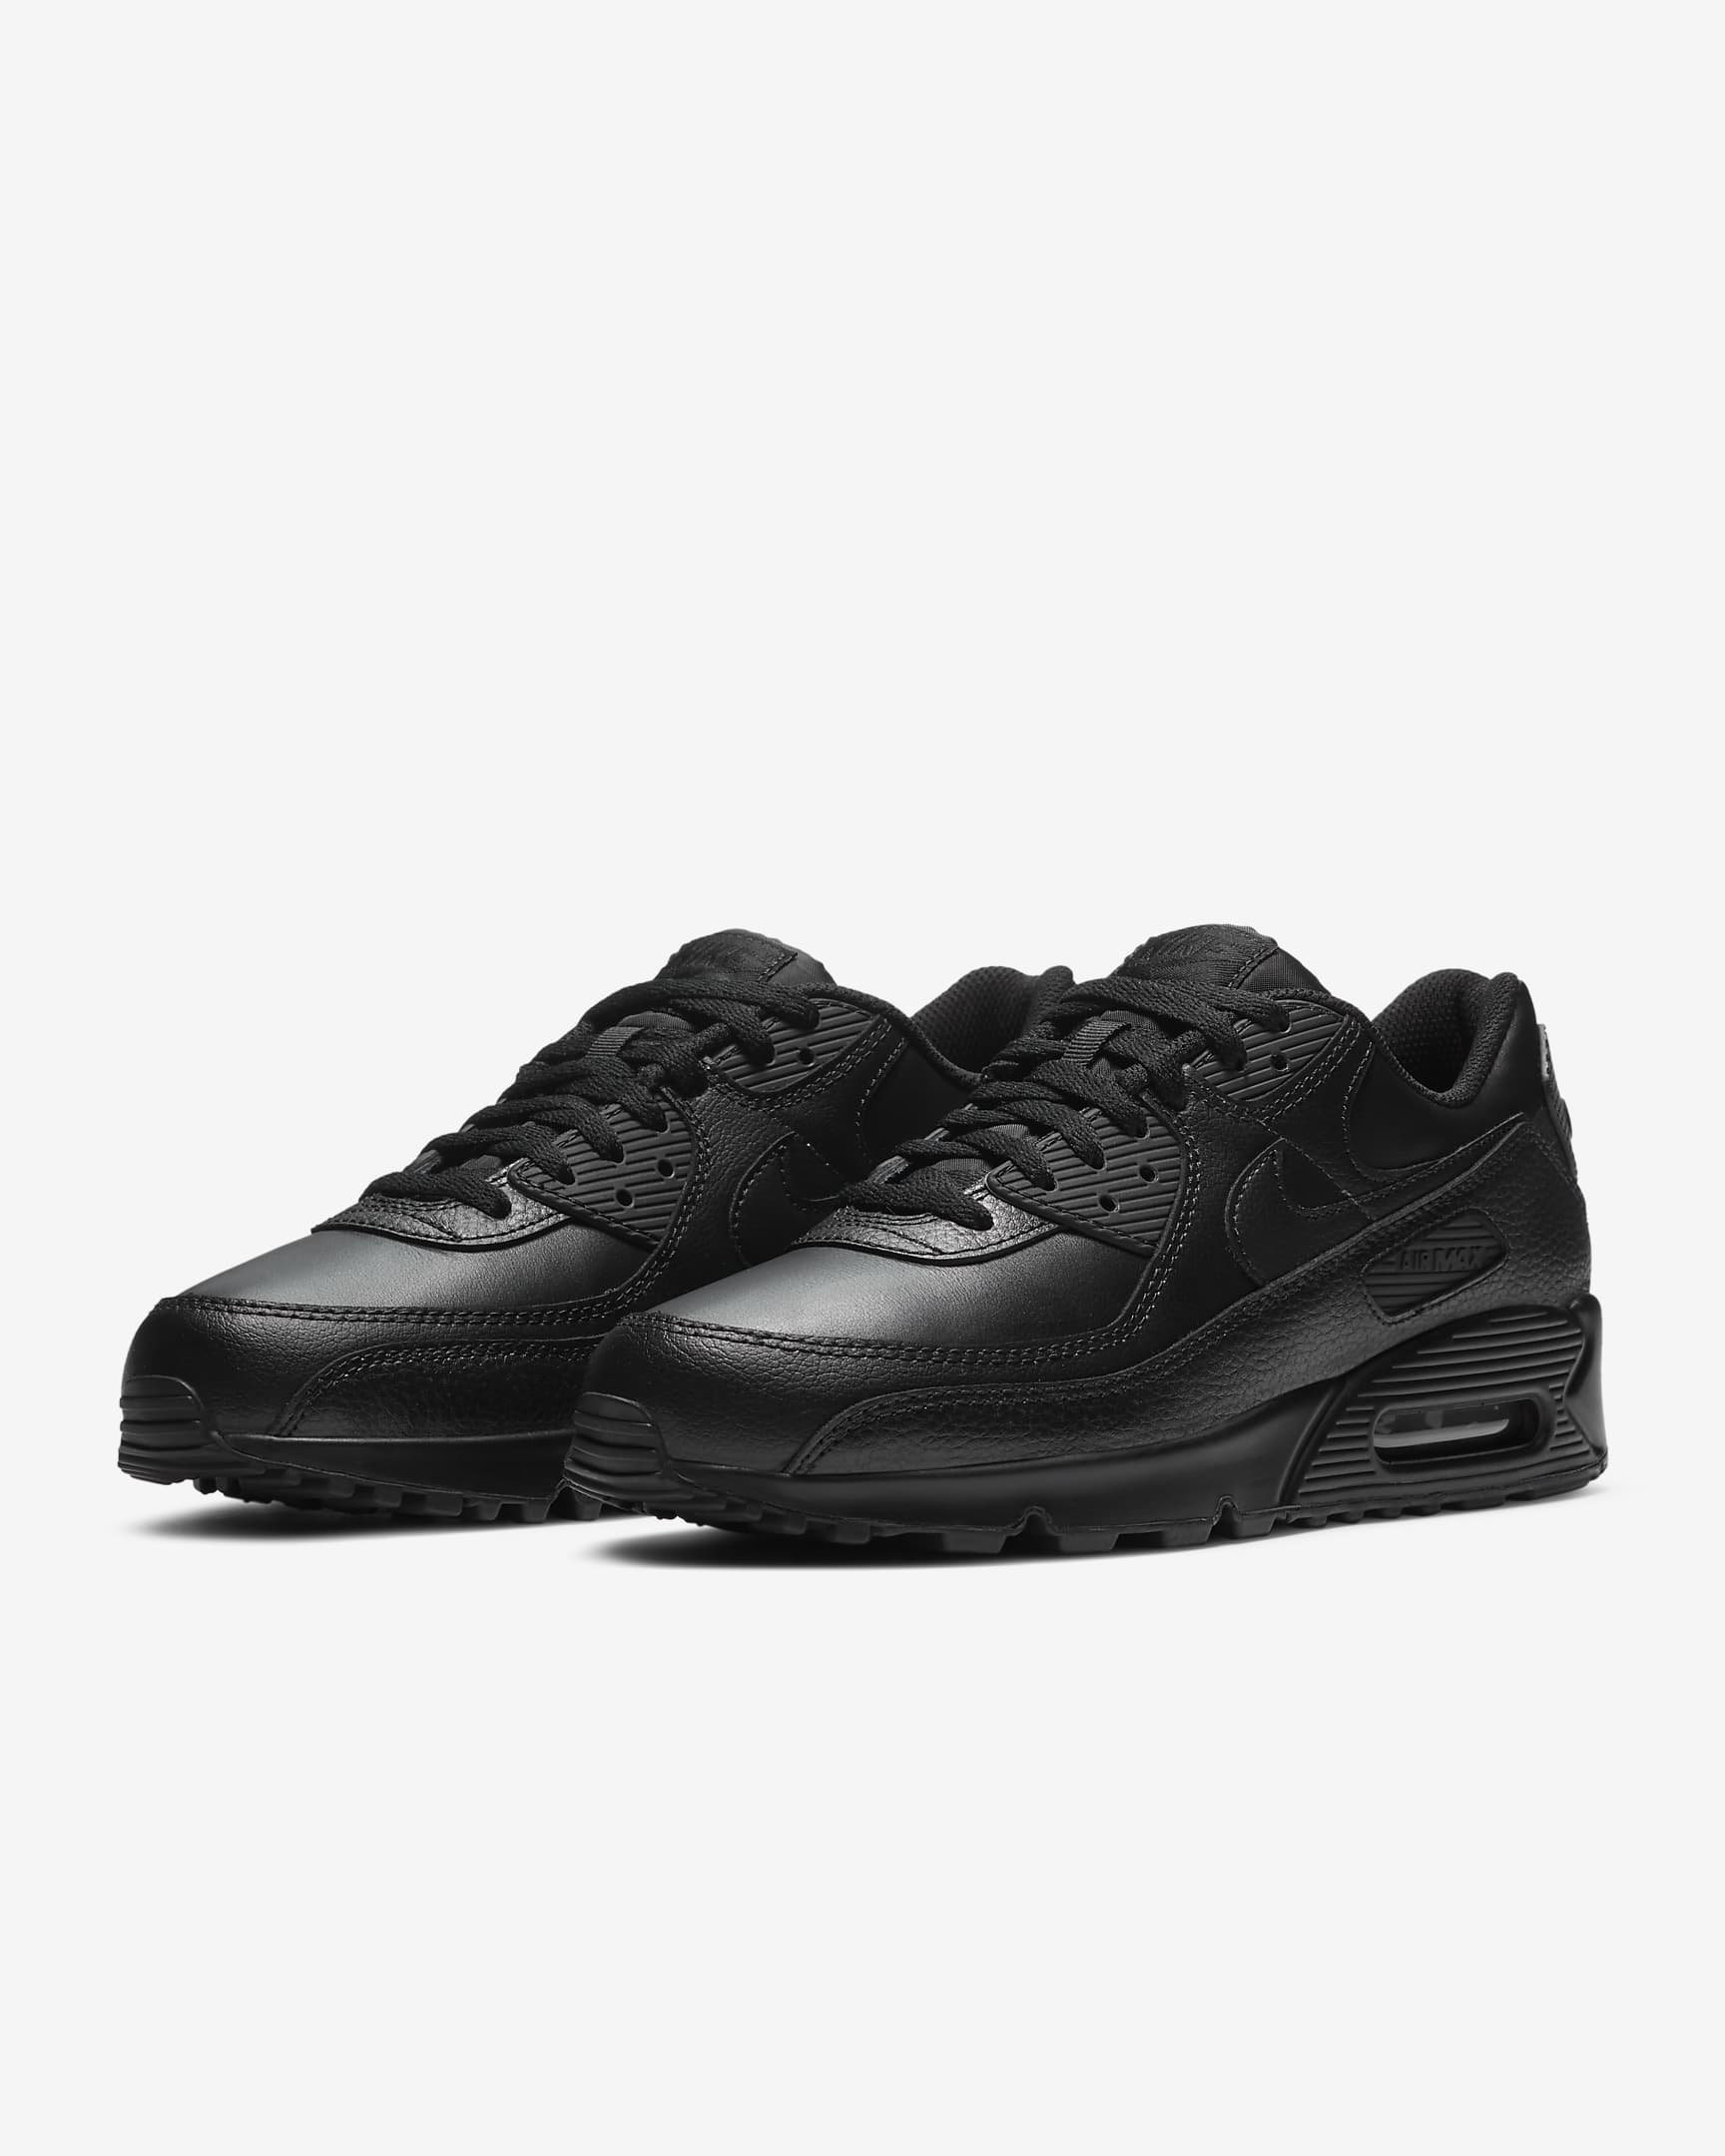 Air Max 90 LTR Men's Shoes - Black/Black/Black